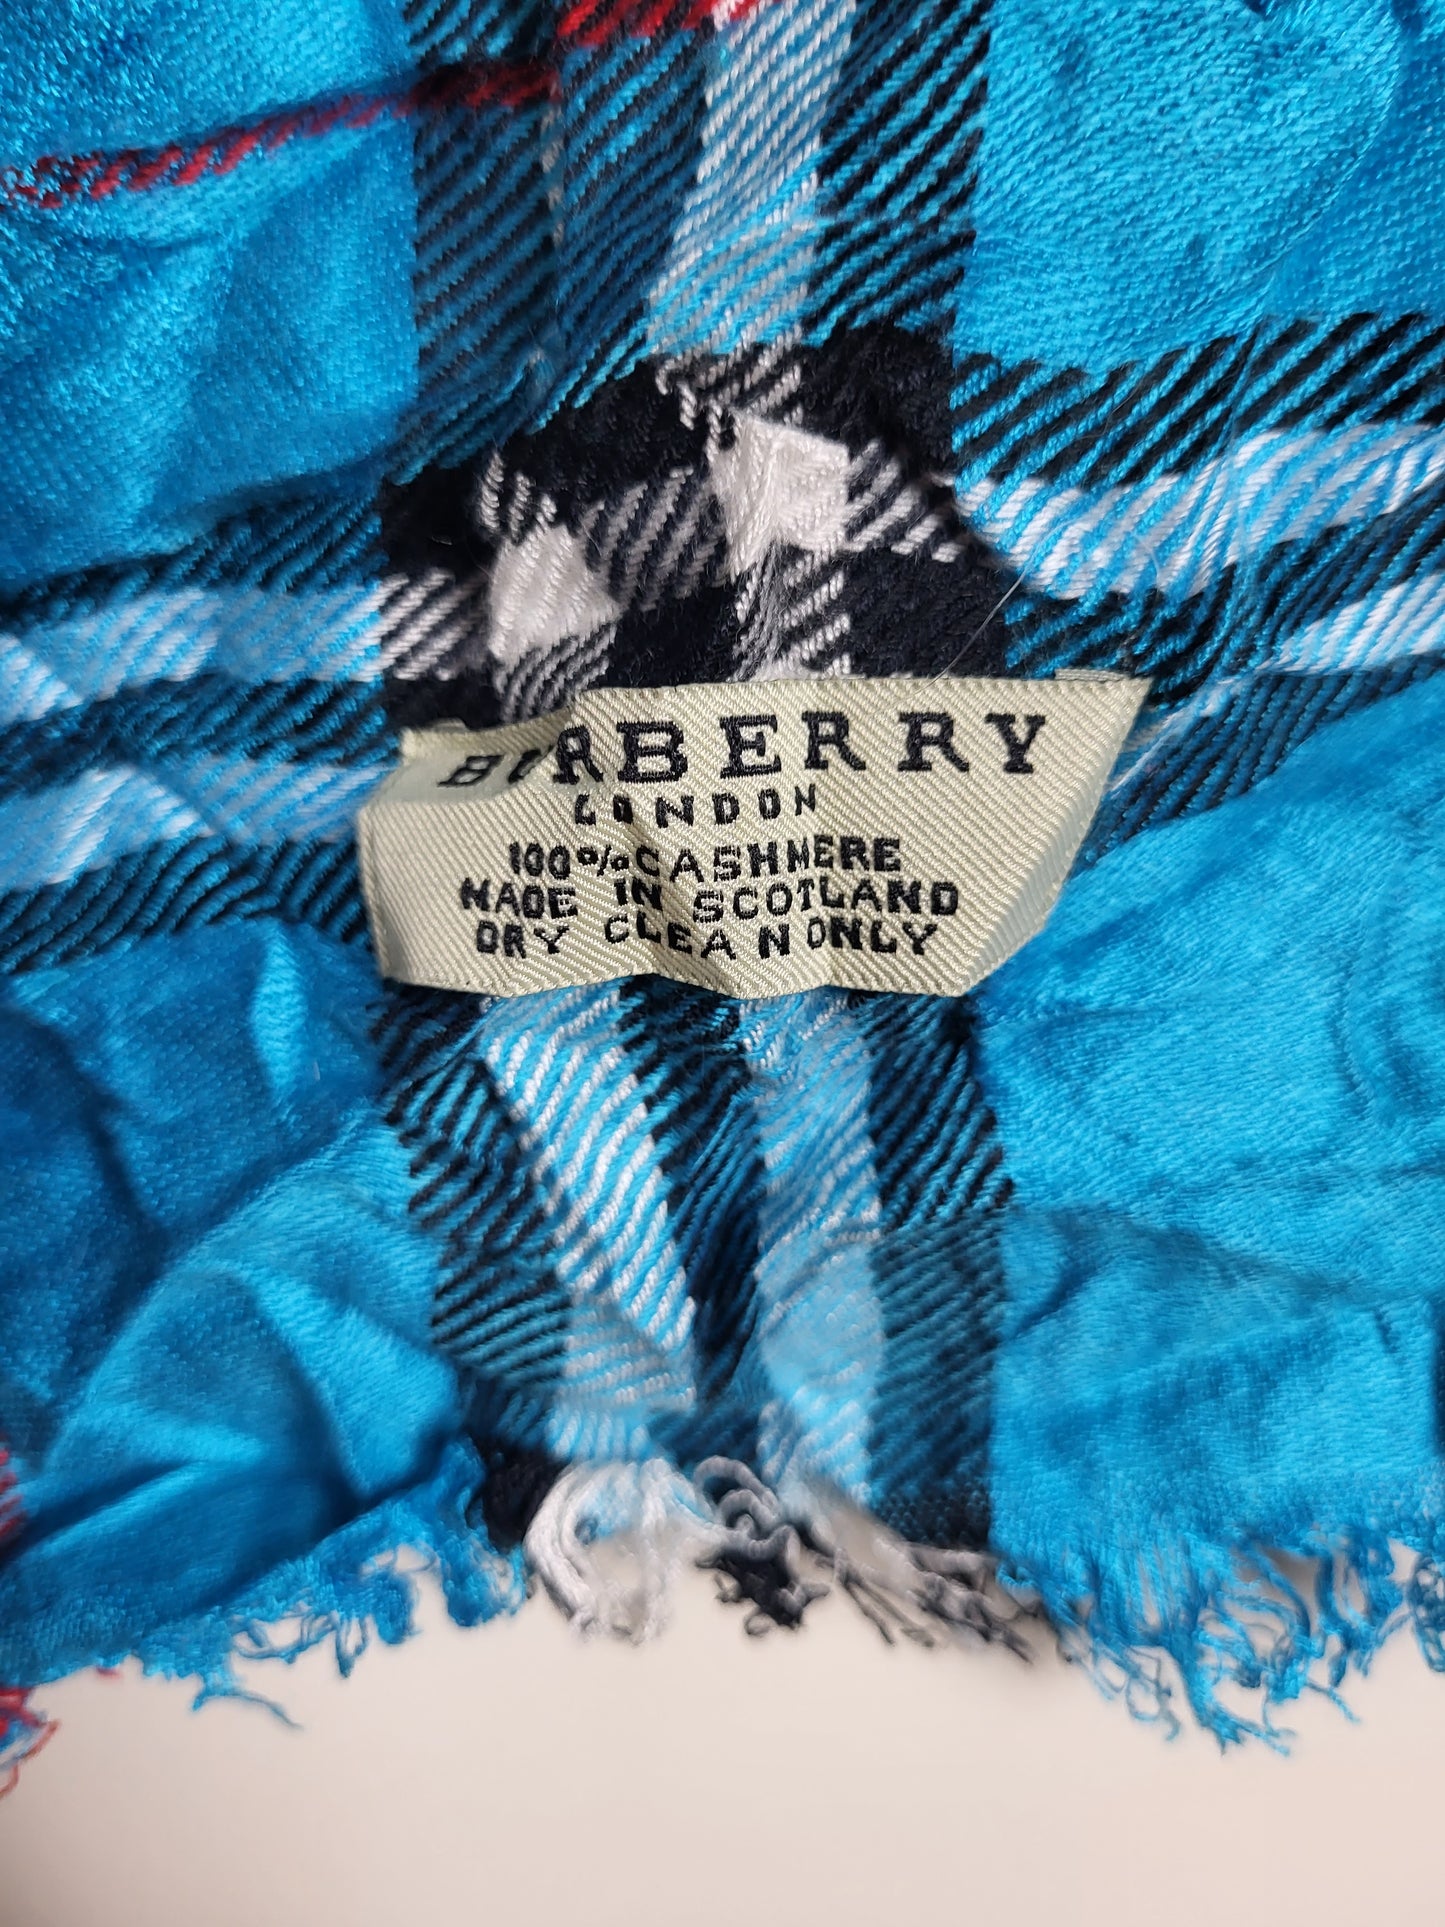 Burberry London - Vintage Schal / Tuch - Blau Tartan- Kaschmir - 175 x 65